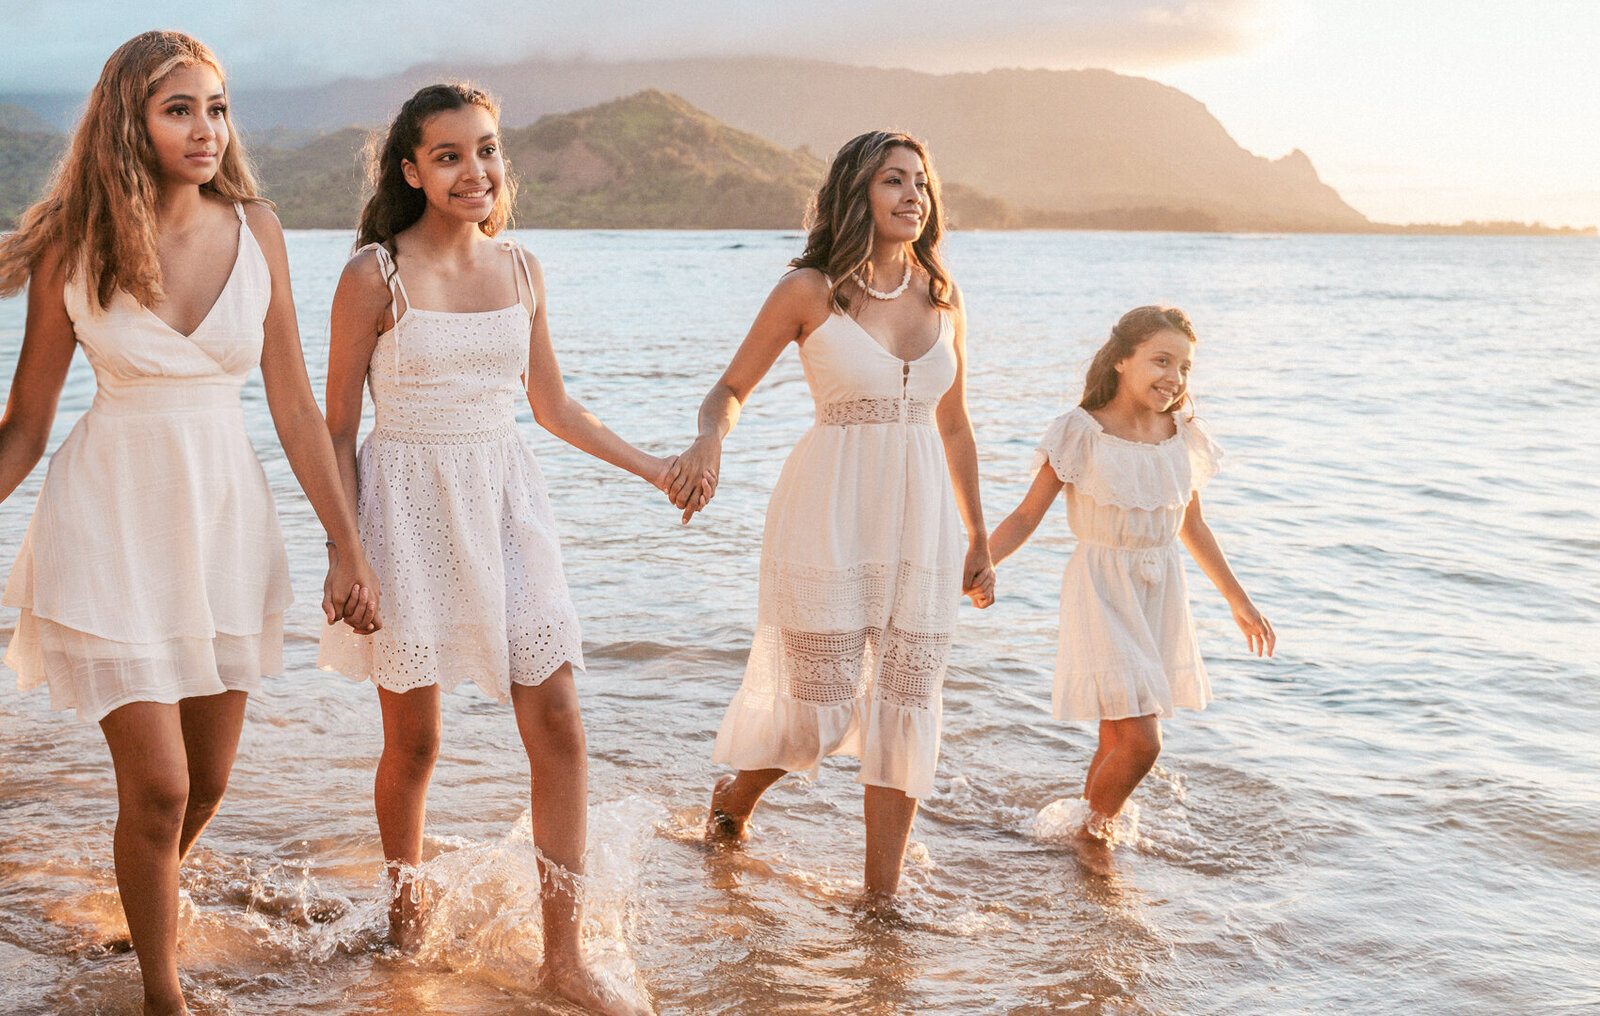 kauai family photographer mini session